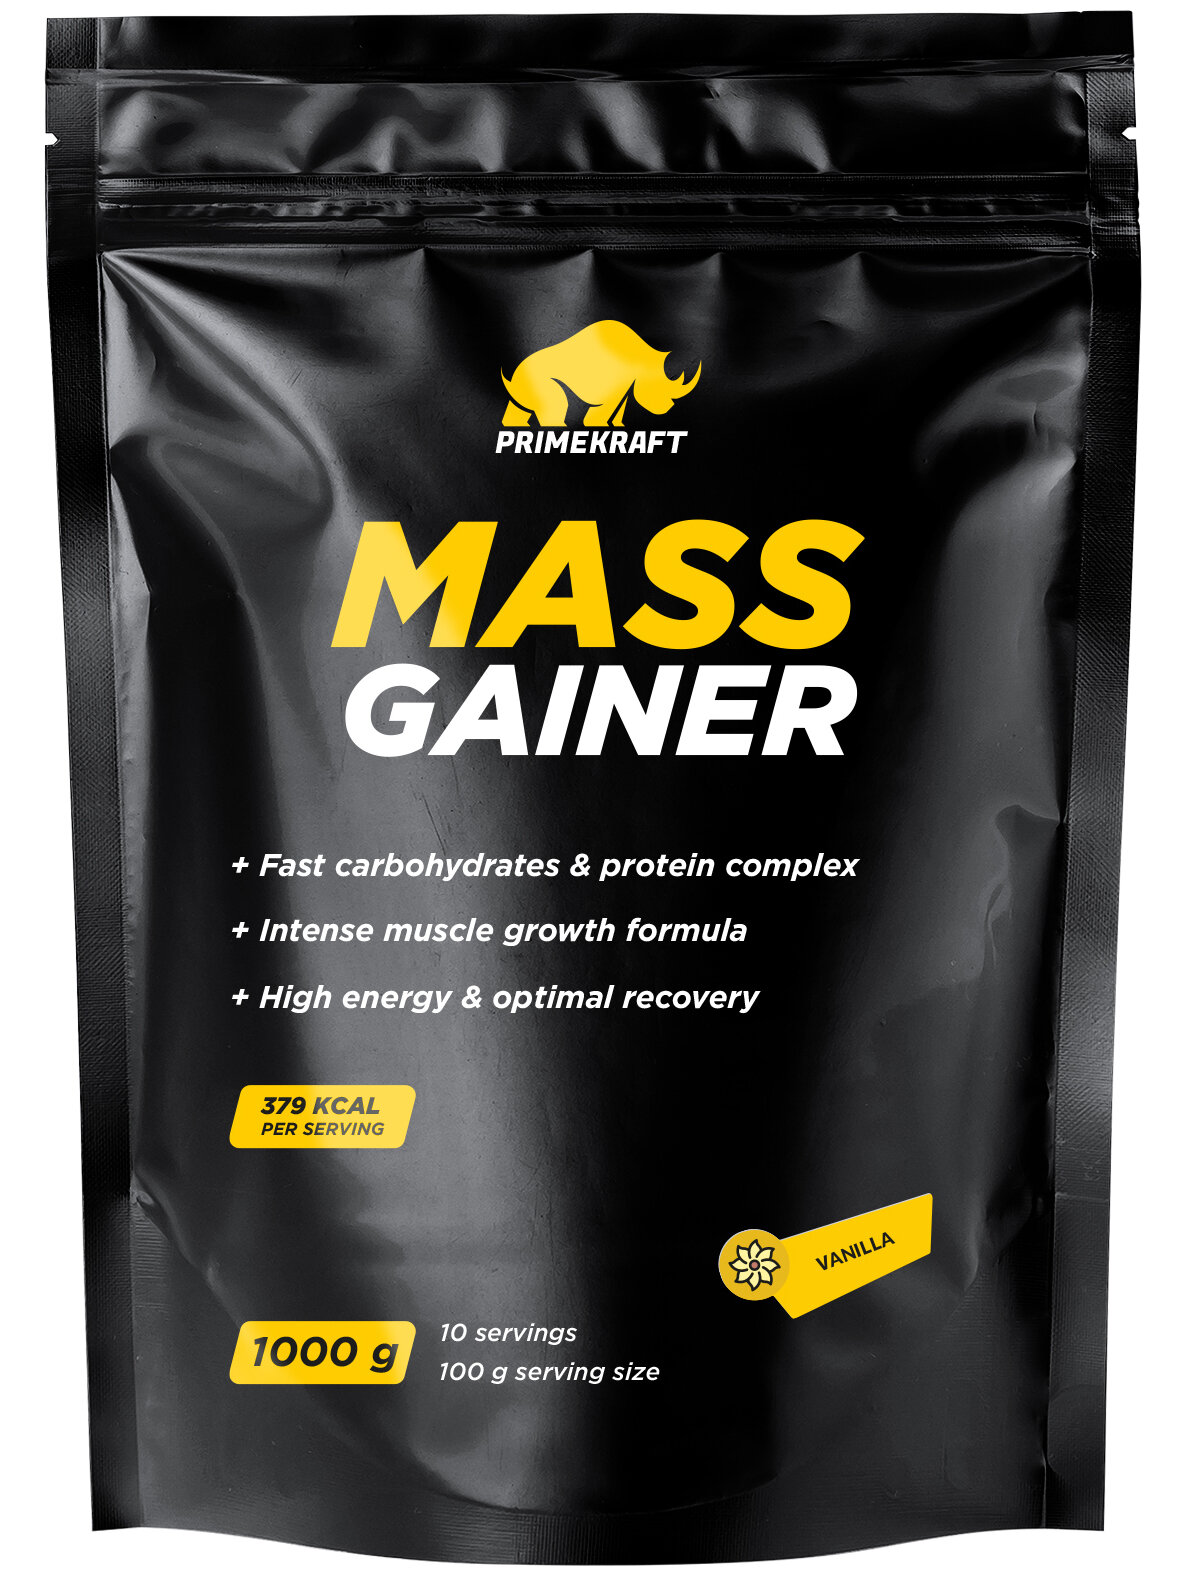 Гейнер для набора массы Prime Kraft Mass Gainer - 1000 грамм, ваниль